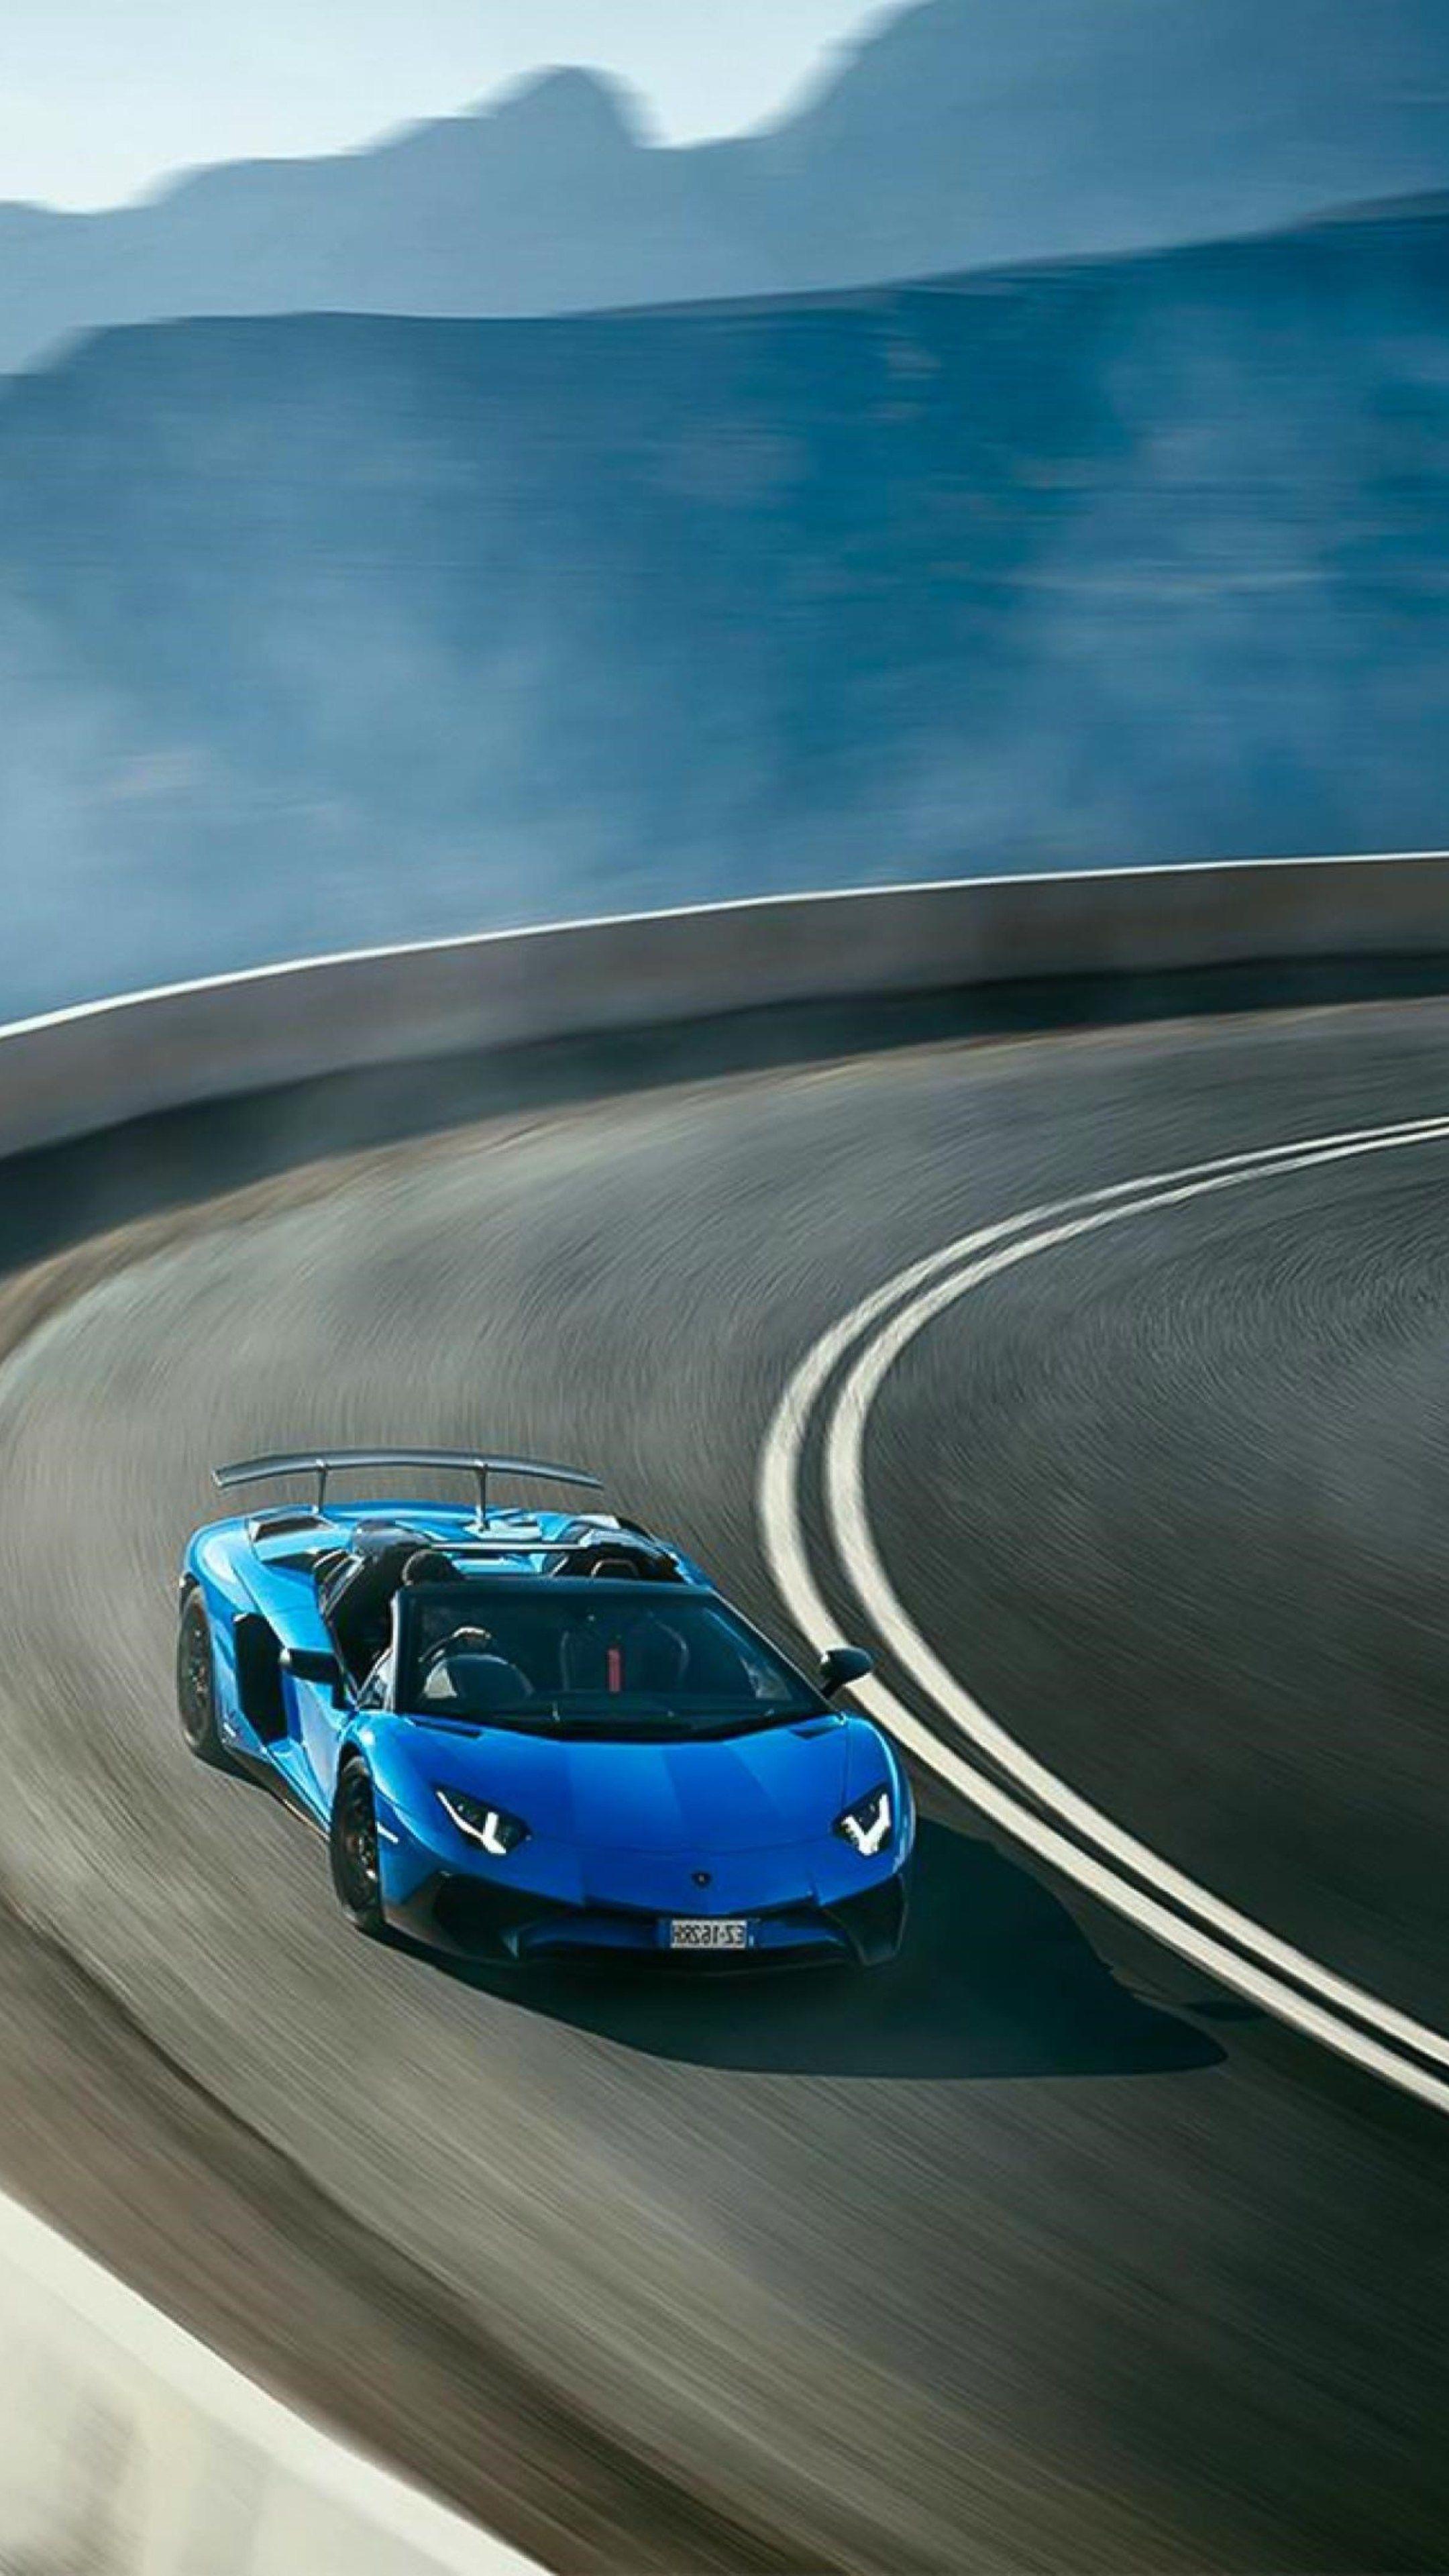 Cars #Lamborghini Aventador Lp750 #wallpaper HD 4k background for android :). Disney cars wallpaper, Europe car, Fancy cars